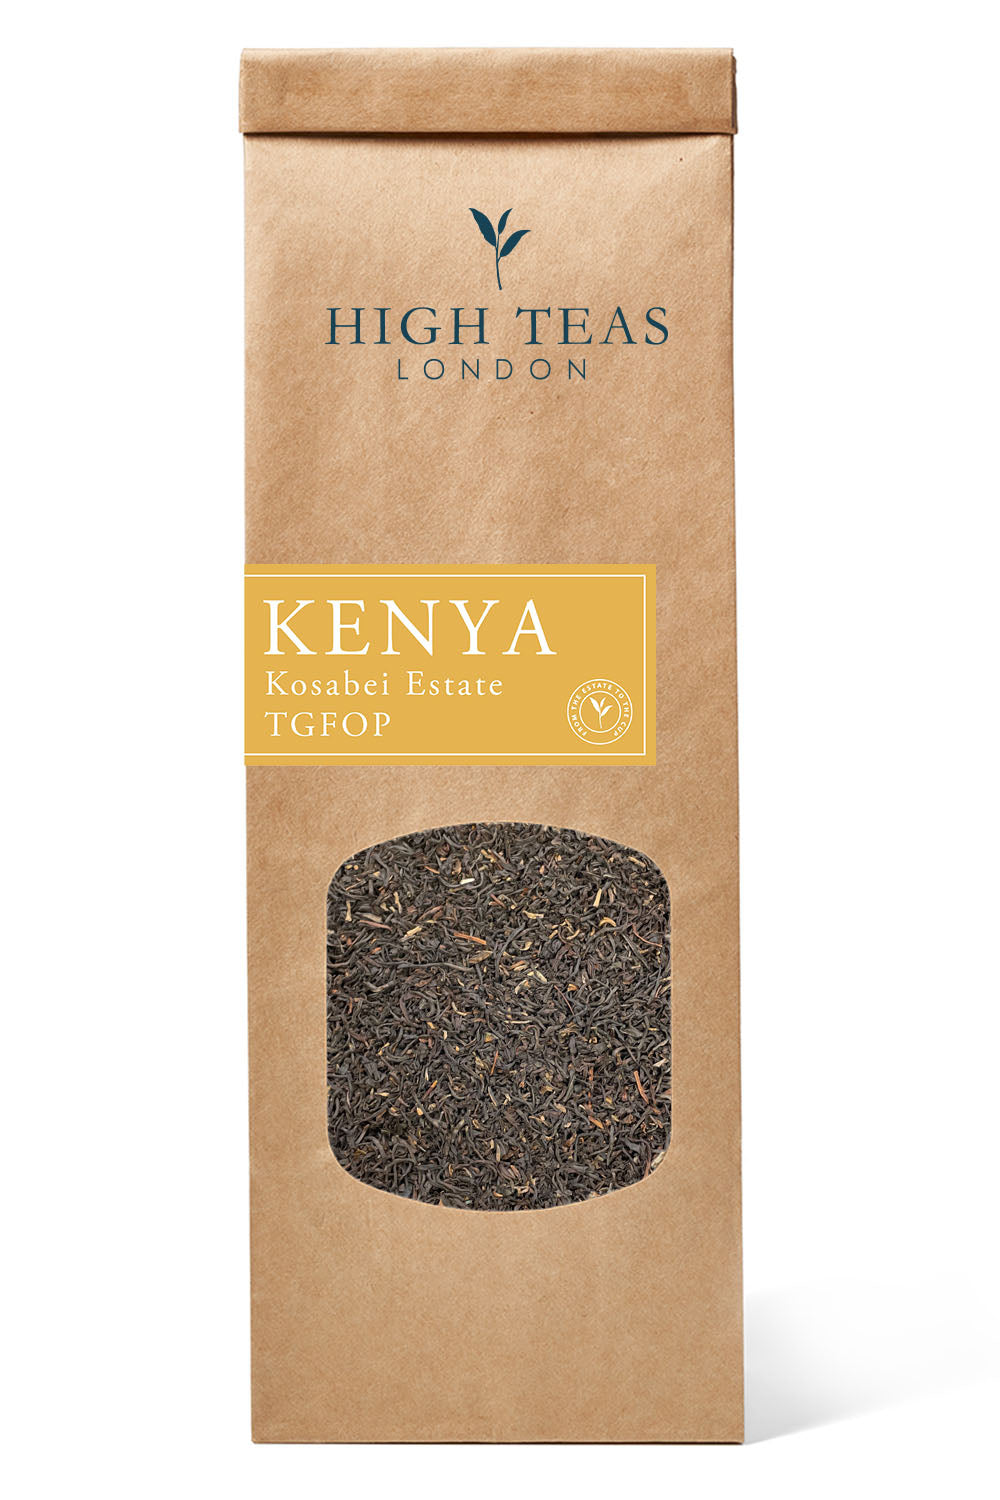 Kenya - Kosabei Estate TGFOP (TM)-50g-Loose Leaf Tea-High Teas